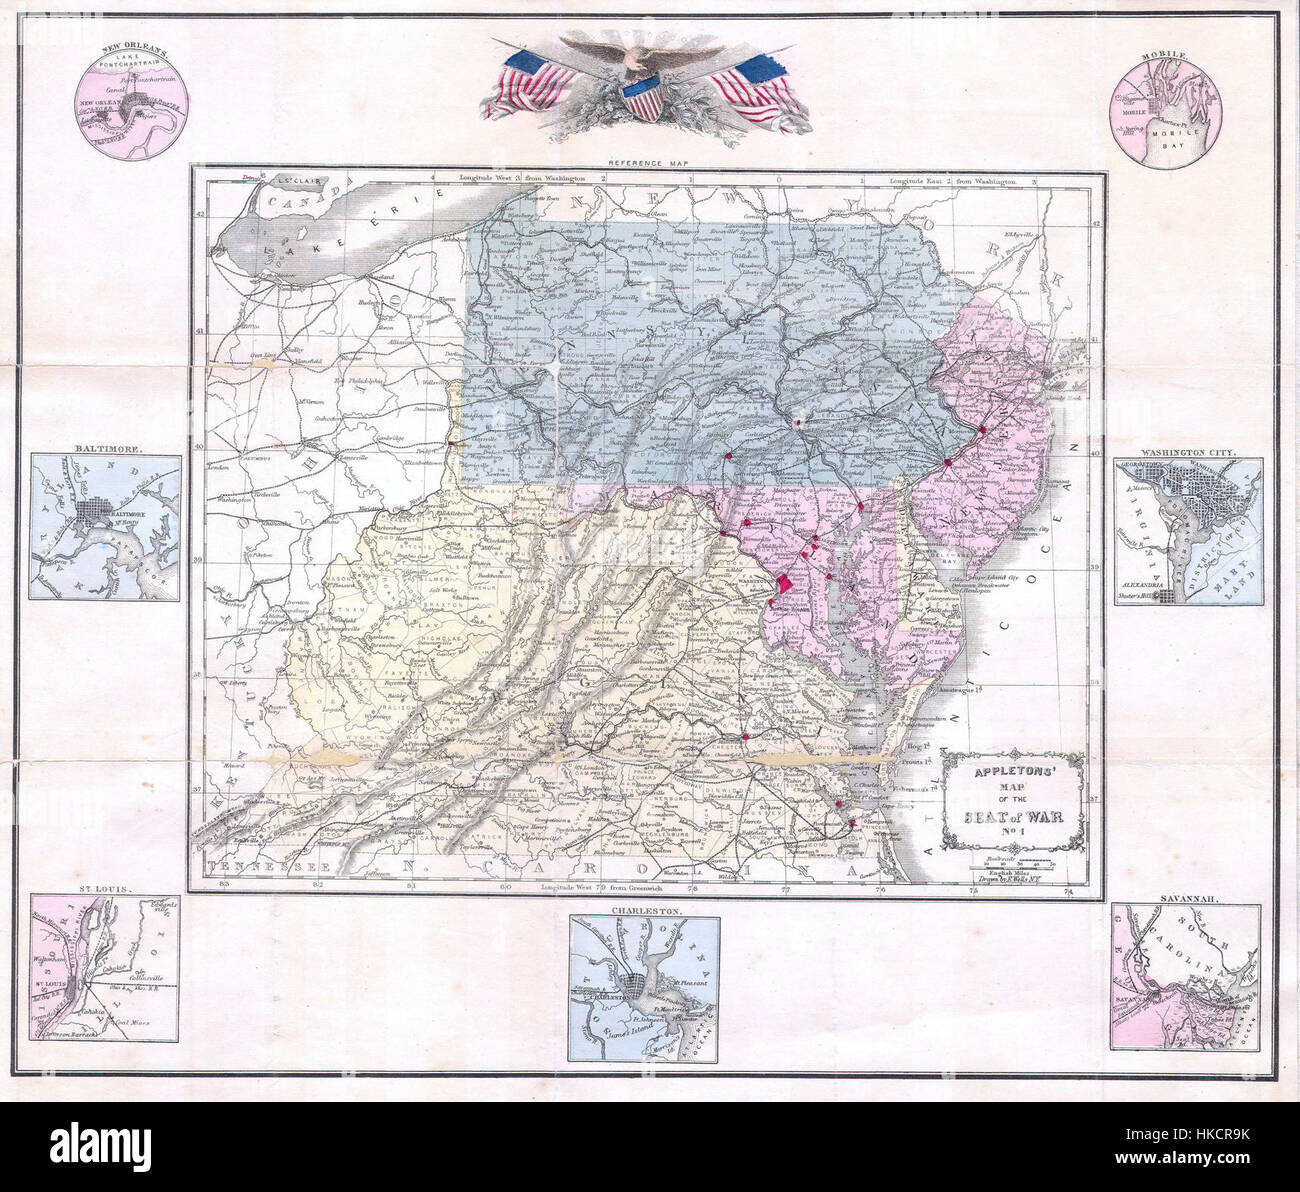 1861 Appleton's Map of the Seat of the Civil War ( Pennsylvania, Virginia, Maryland, North Carolina   Geographicus   SeatofCivilWar appleton 1861 Stock Photo